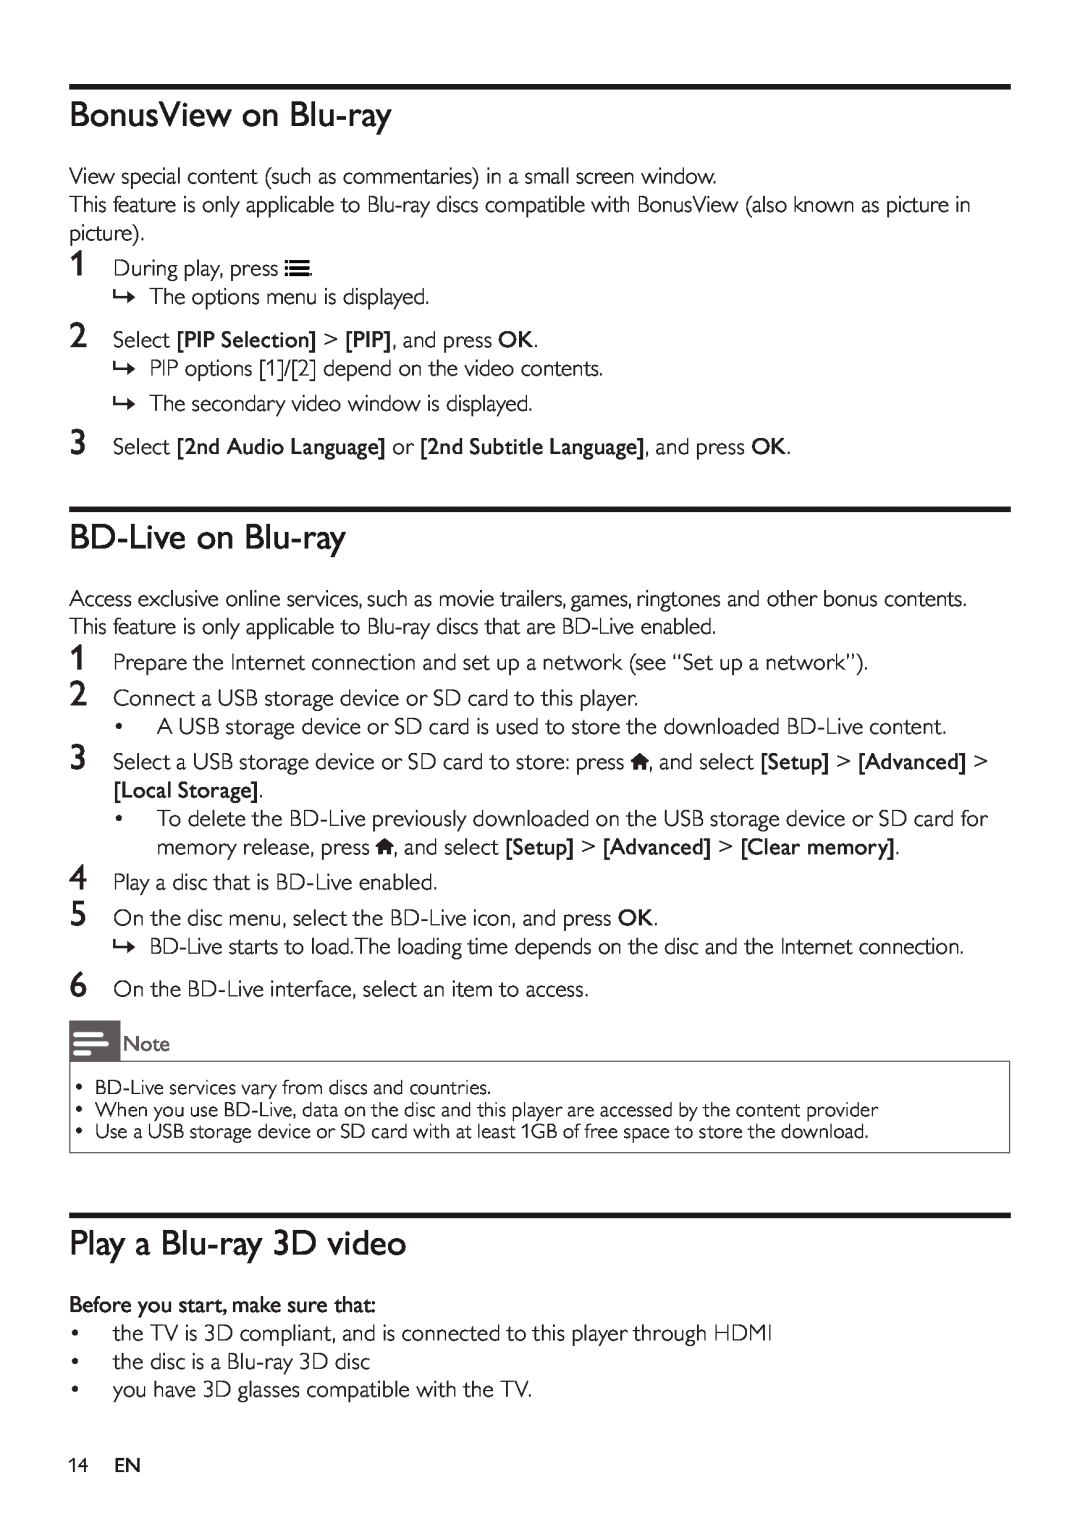 Philips BDP5200 user manual BonusView on Blu-ray, BD-Live on Blu-ray, Play a Blu-ray 3D video 